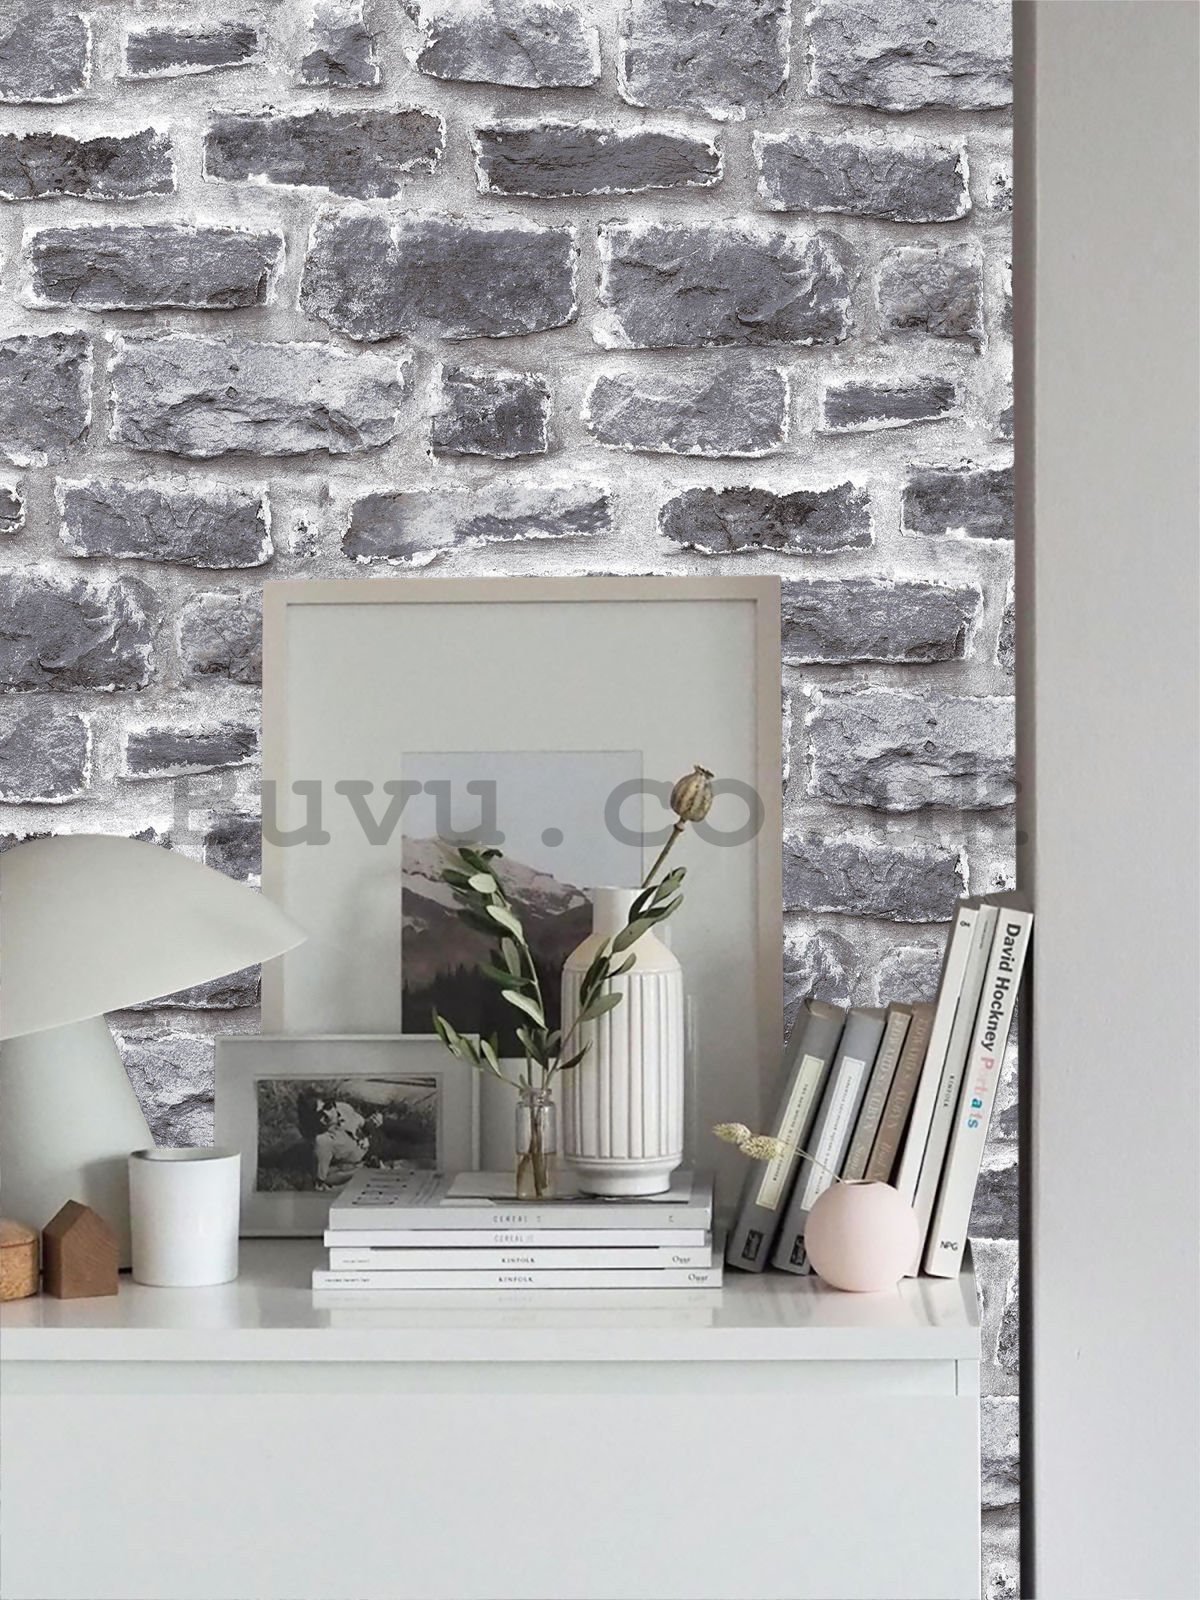 Vinyl wallpaper brick wall - shades of gray